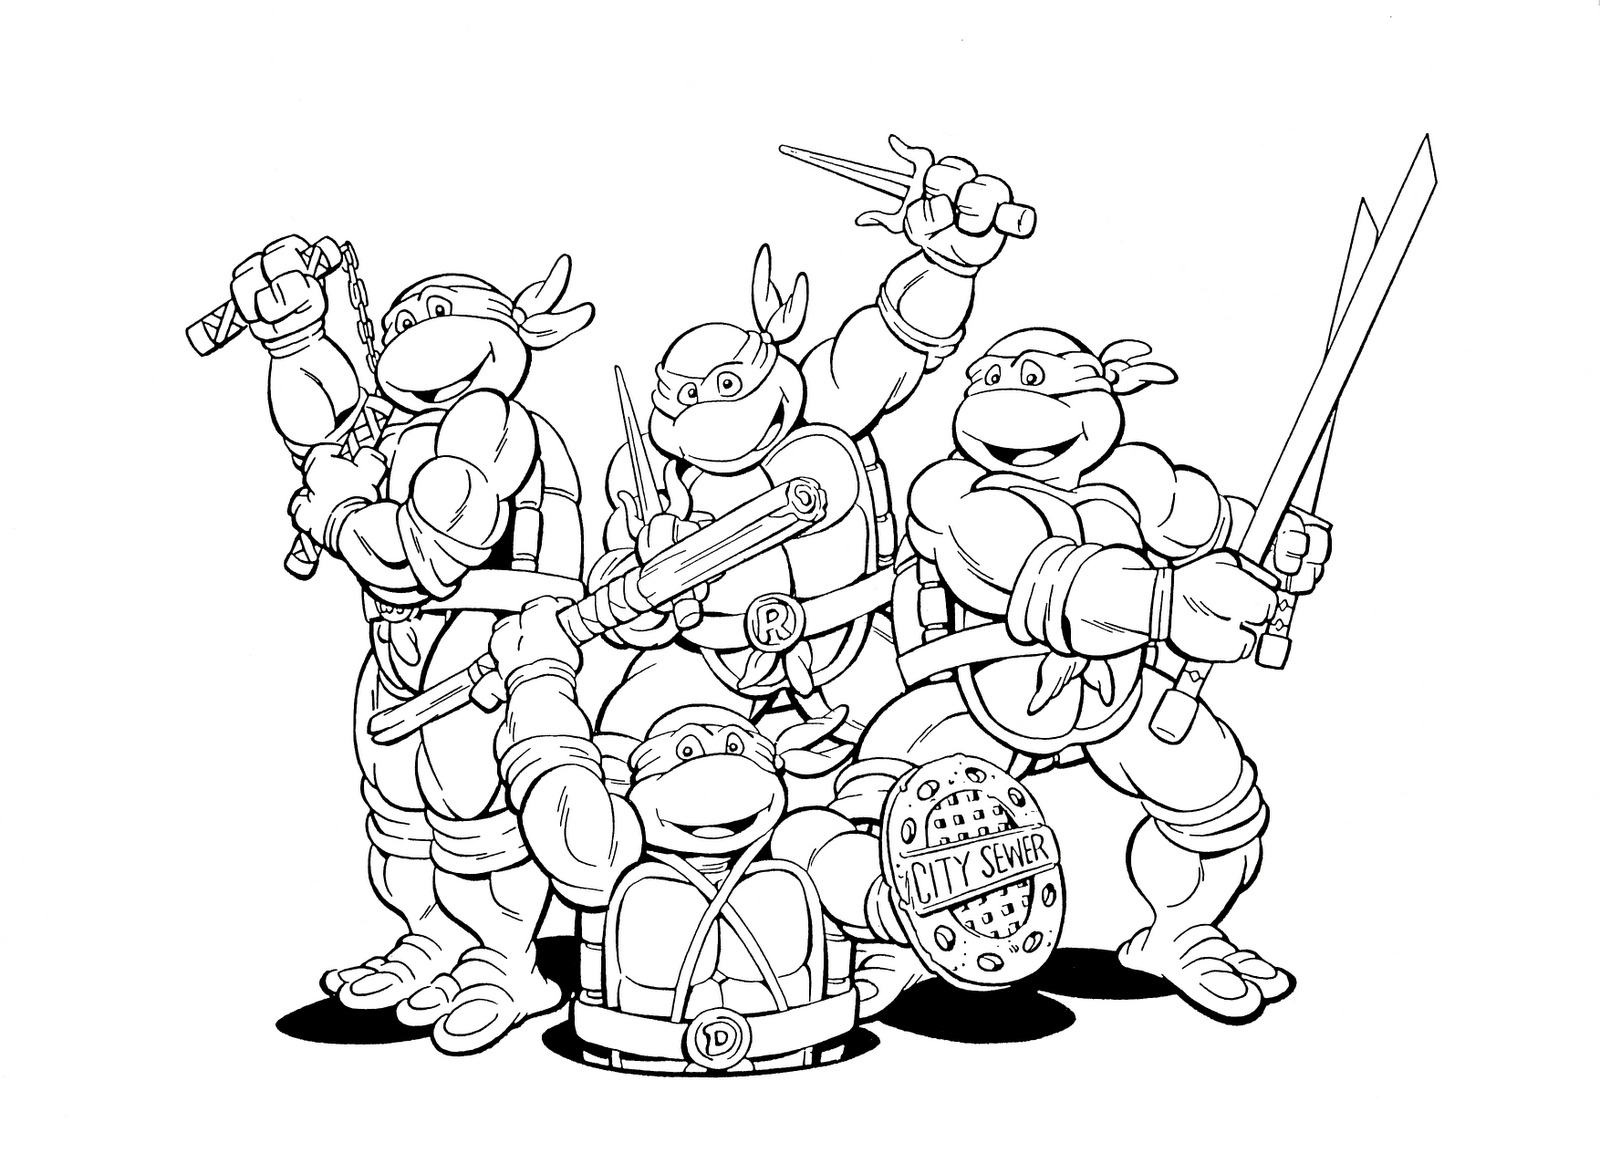 Mutant Ninja Turtles Coloring Pages Image